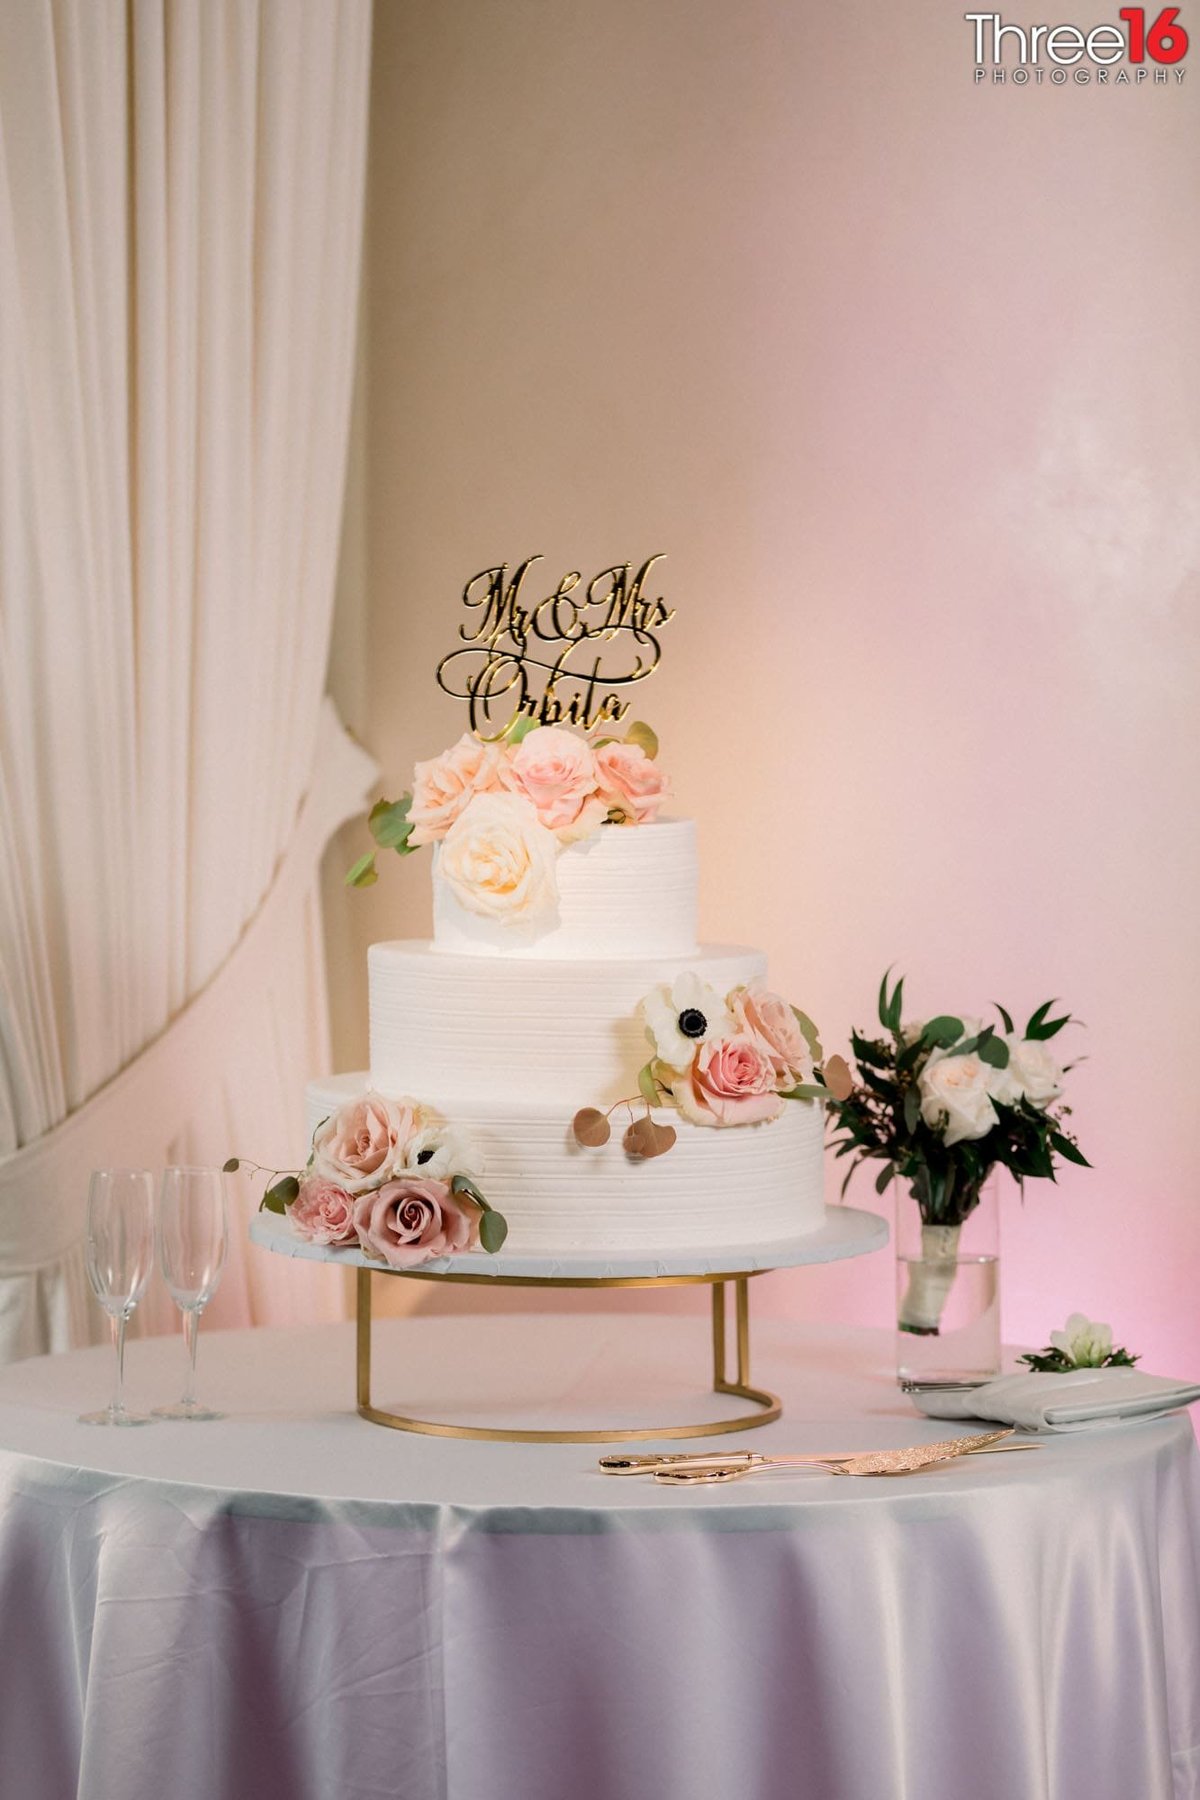 White three-tiered wedding cake awaits the wedding reception